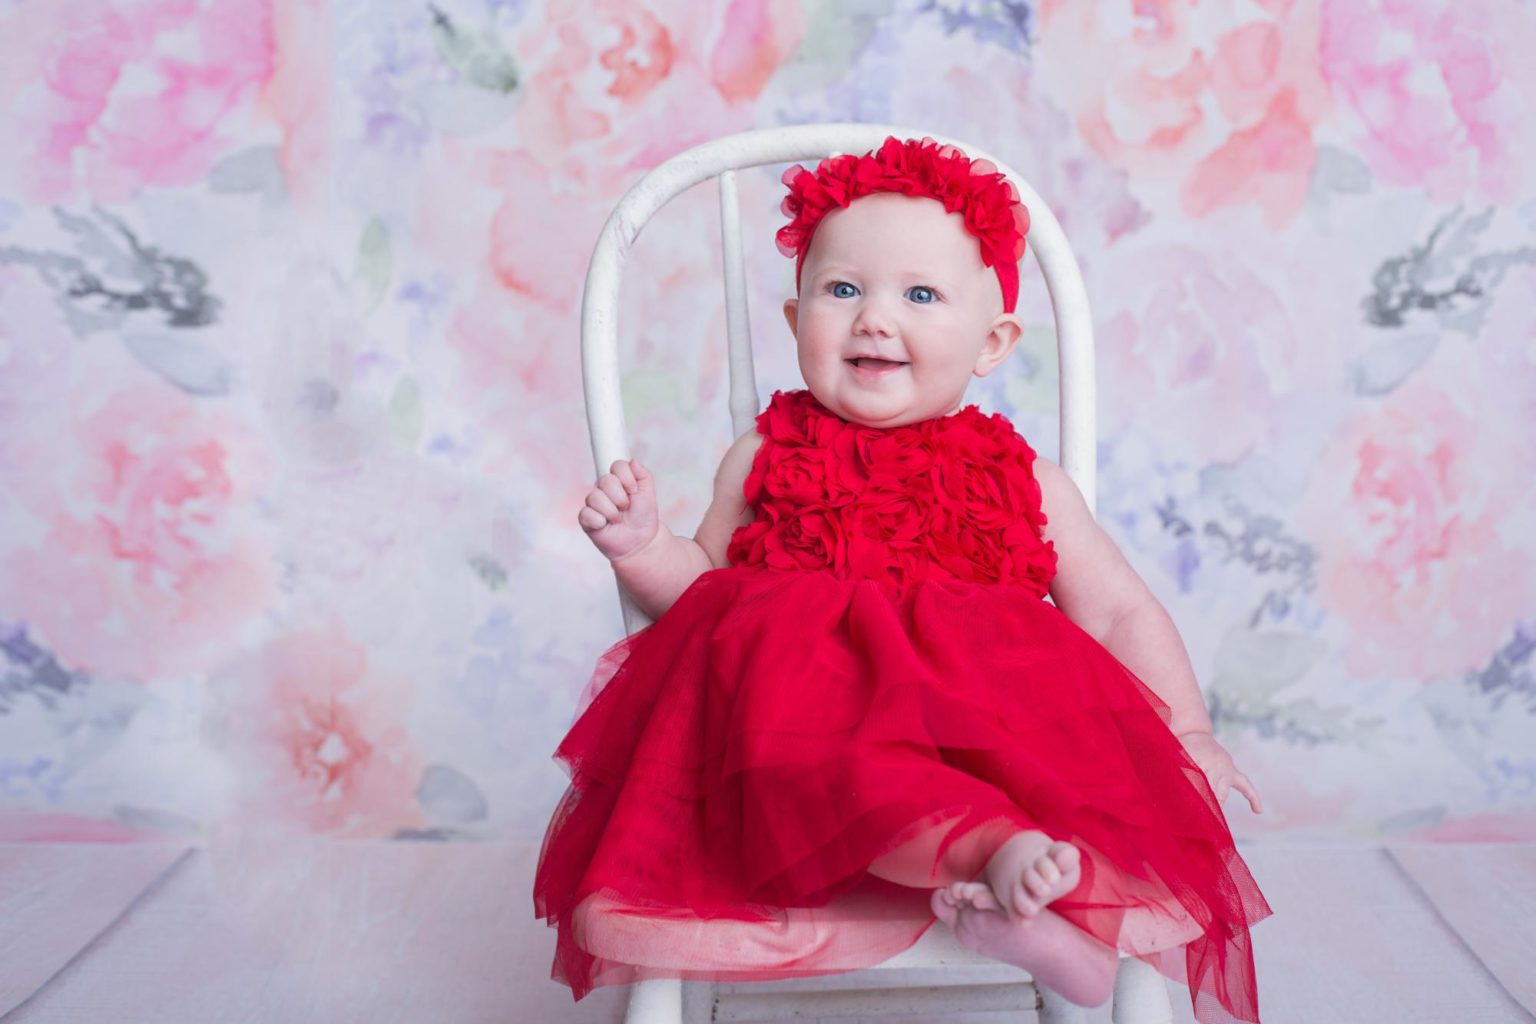 Quarantine Activities For Babies - Katie Corinne Photography's Blog